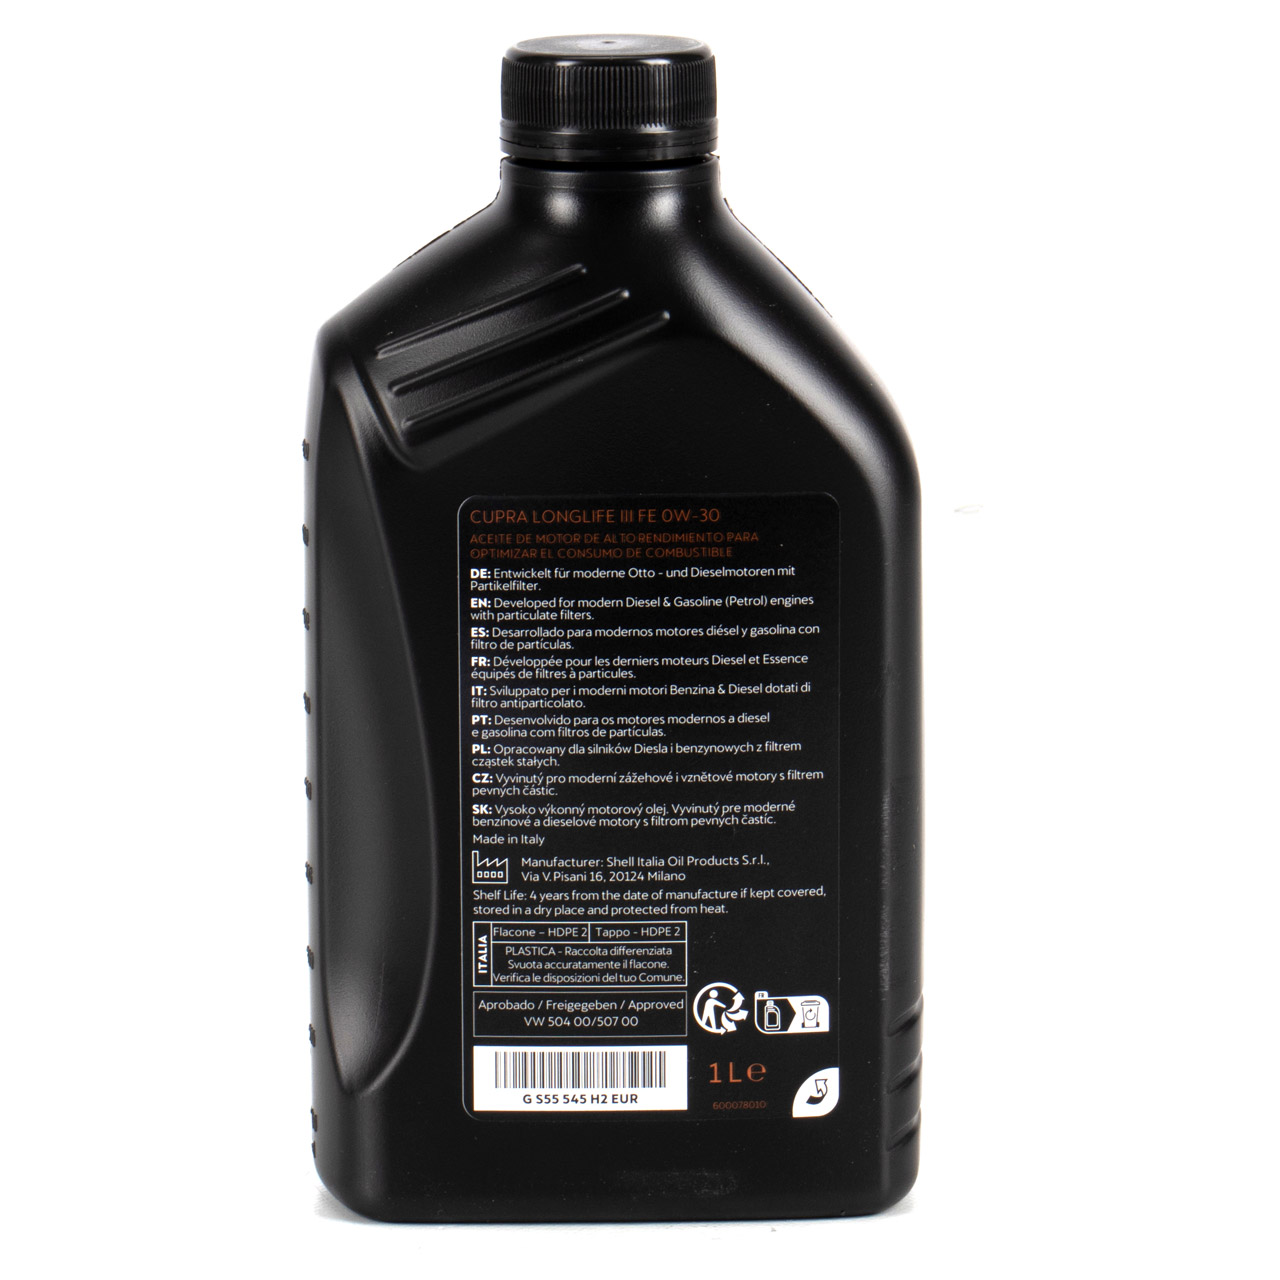 1L 1 Liter ORIGINAL CUPRA Motoröl Öl Longlife 3 III SAE 0W-30 504.00 507.00 GS55545H2